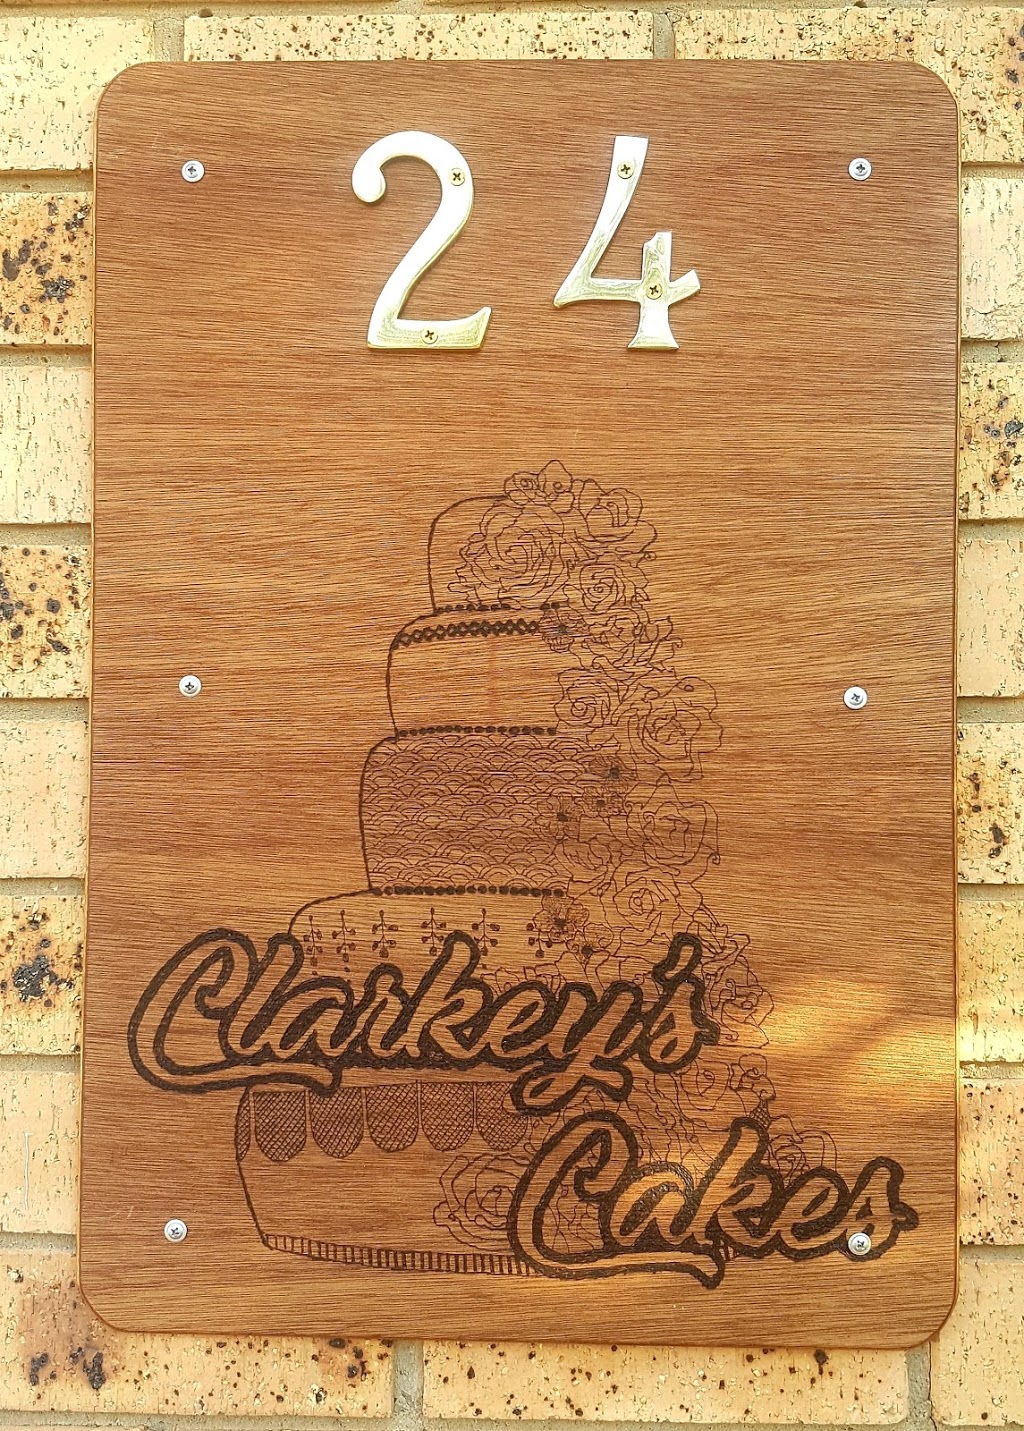 Clarkeys Cakes | bakery | 24 Kinsella St, Karabar NSW 2620, Australia | 0429726213 OR +61 429 726 213